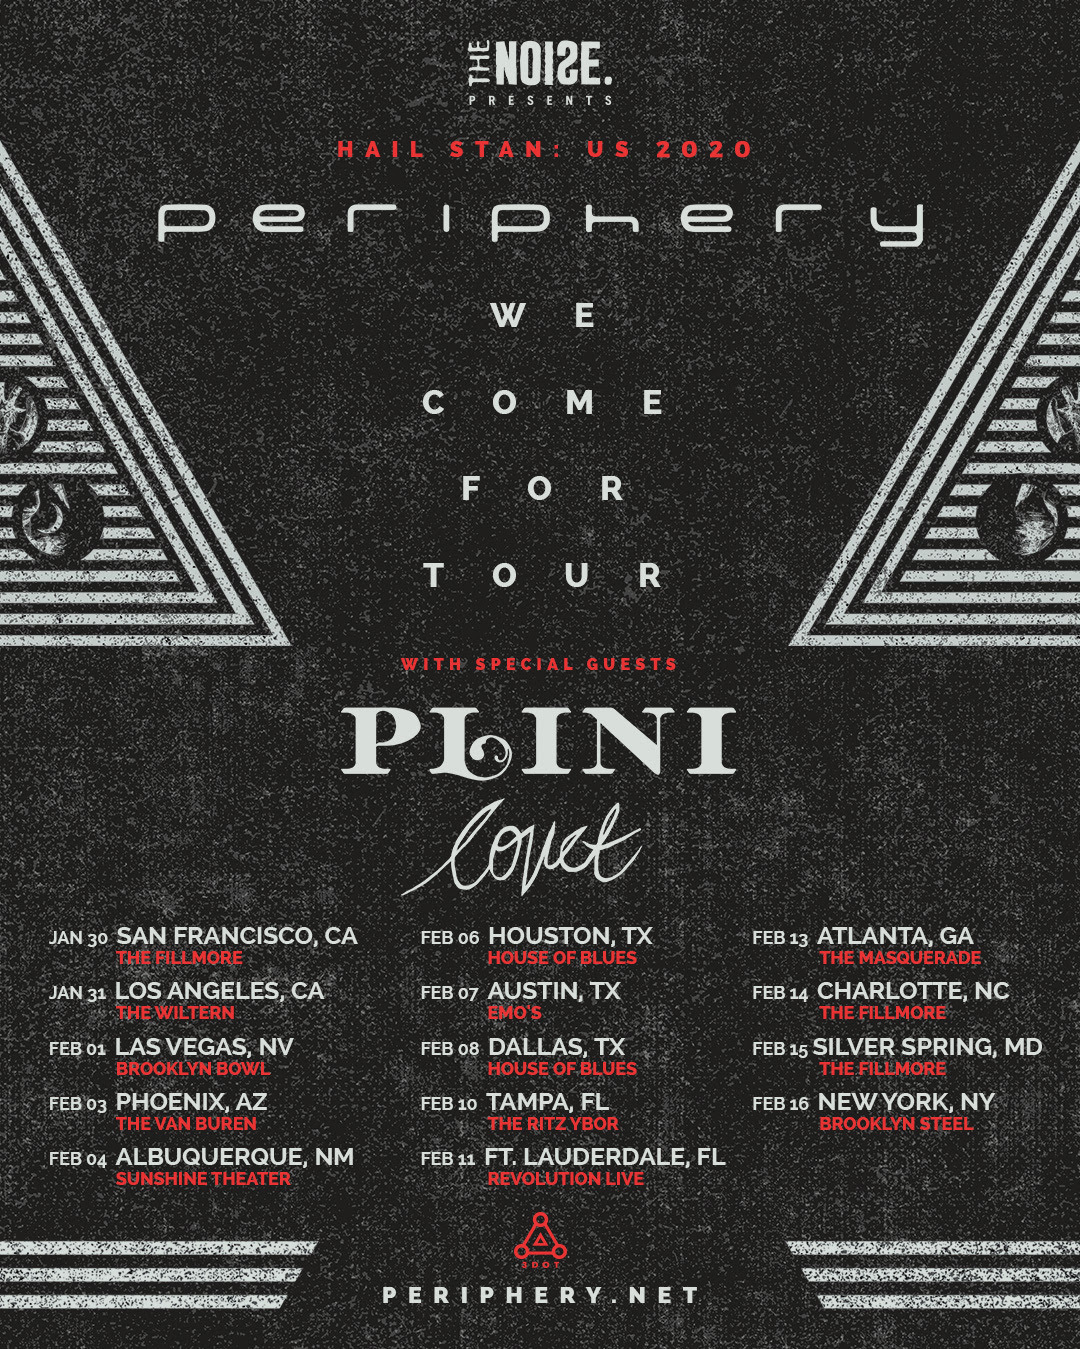 Periphery Extend Hail Stan Tour, Announce 2020 Dates BPM